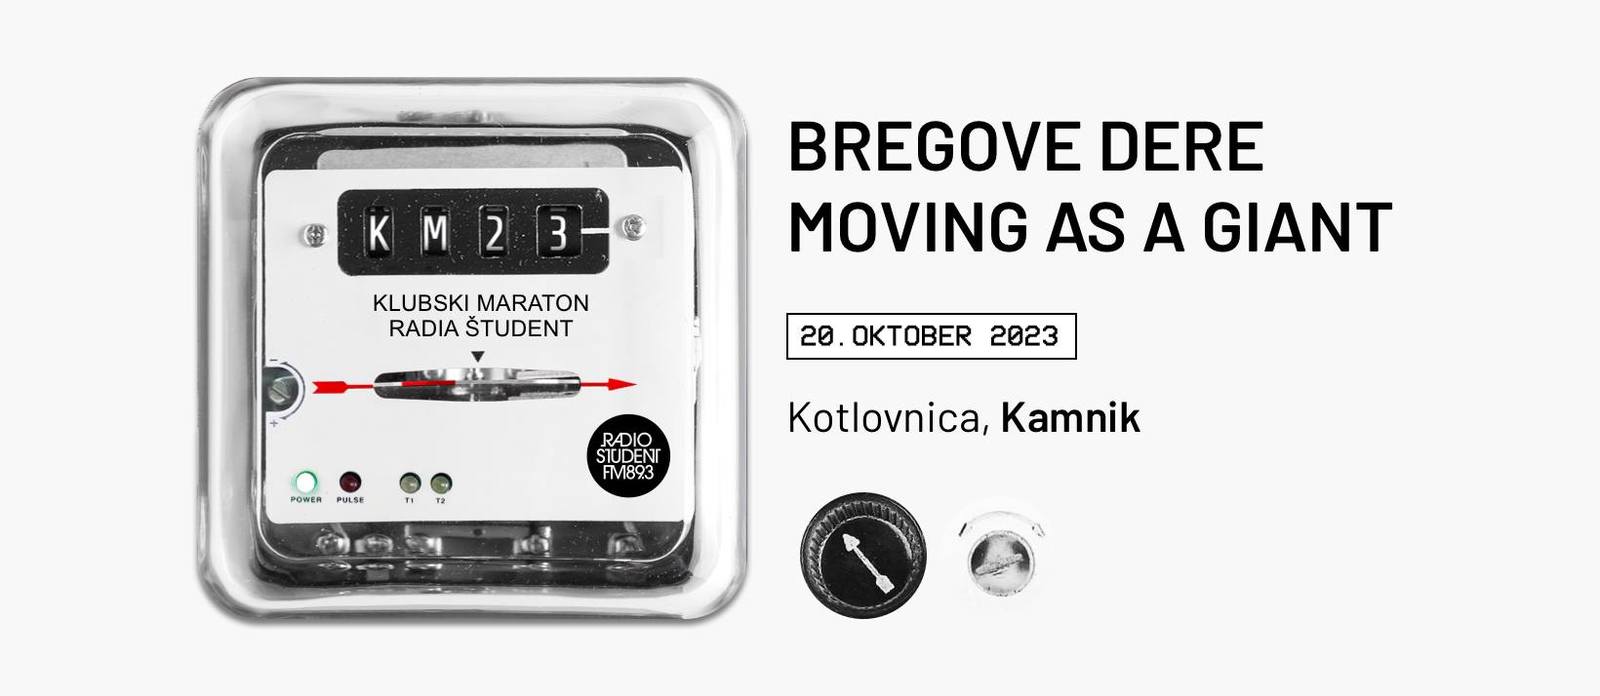 KM23 v Kamniku: Bregove dere + Moving as a Giant